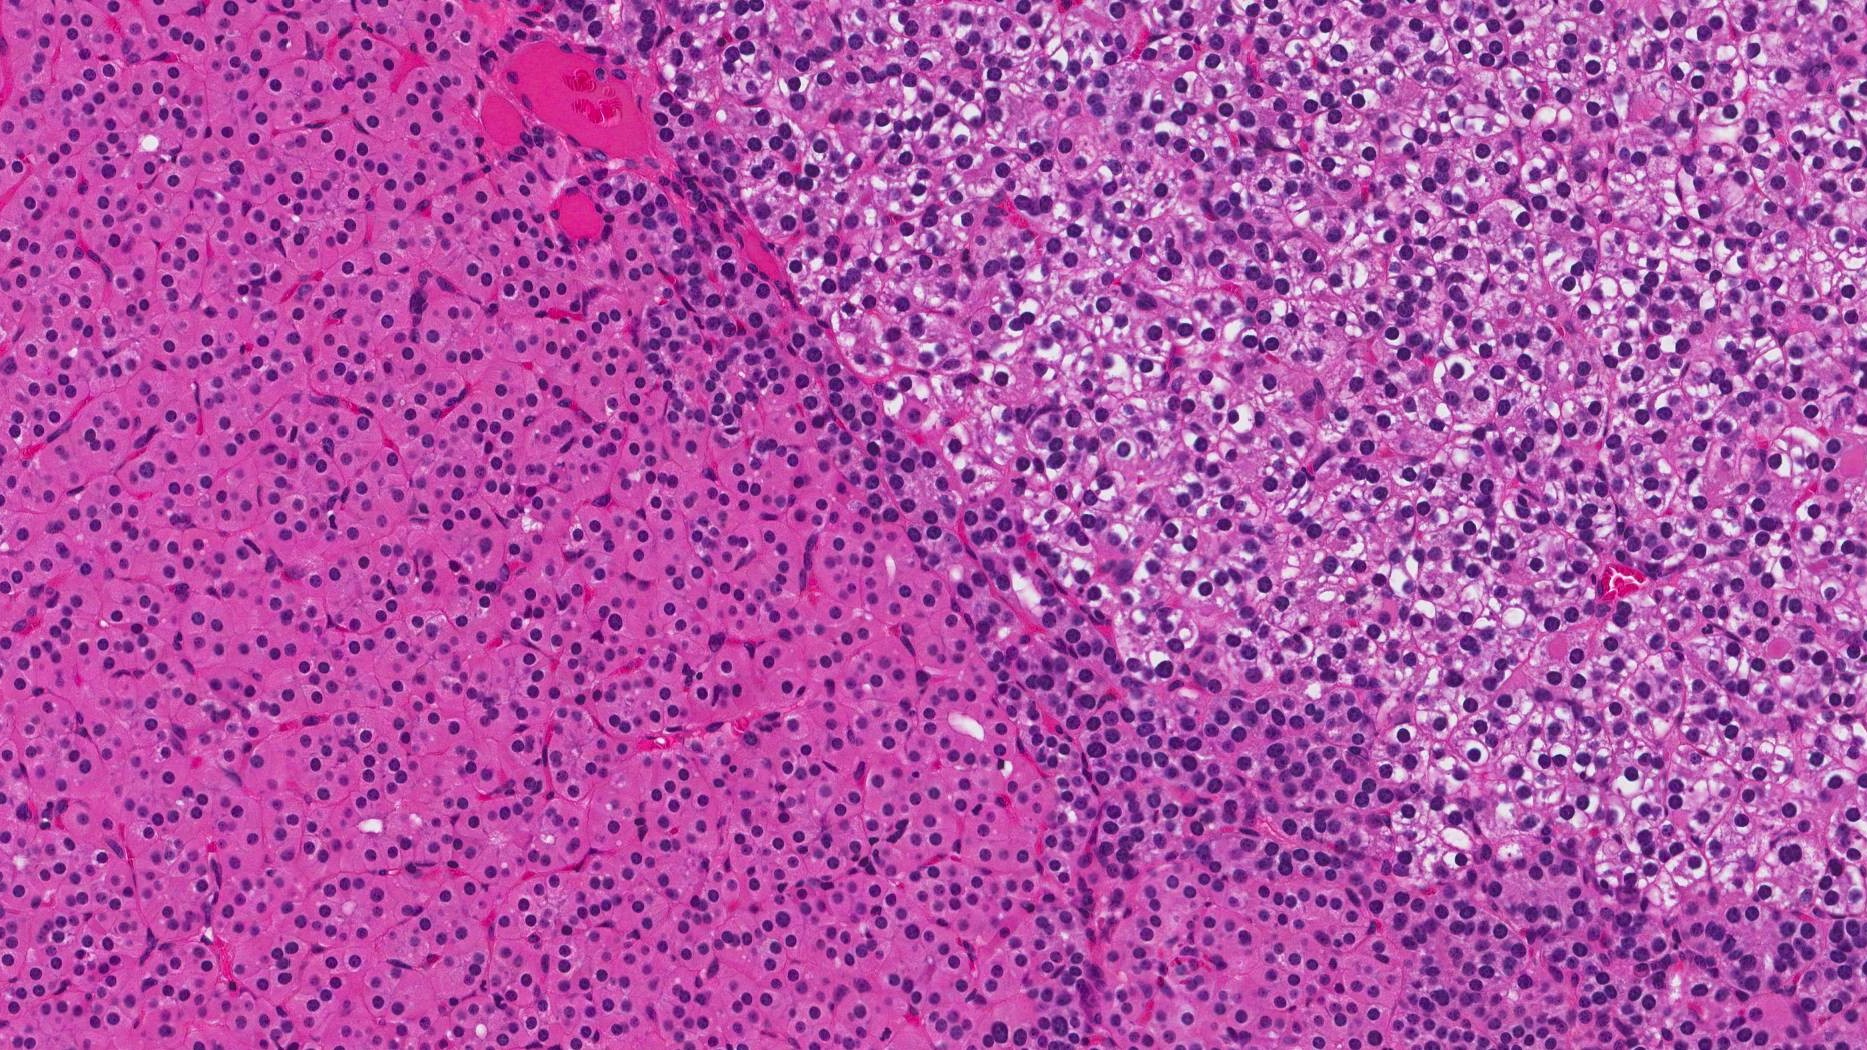 parathyroid adenoma cells